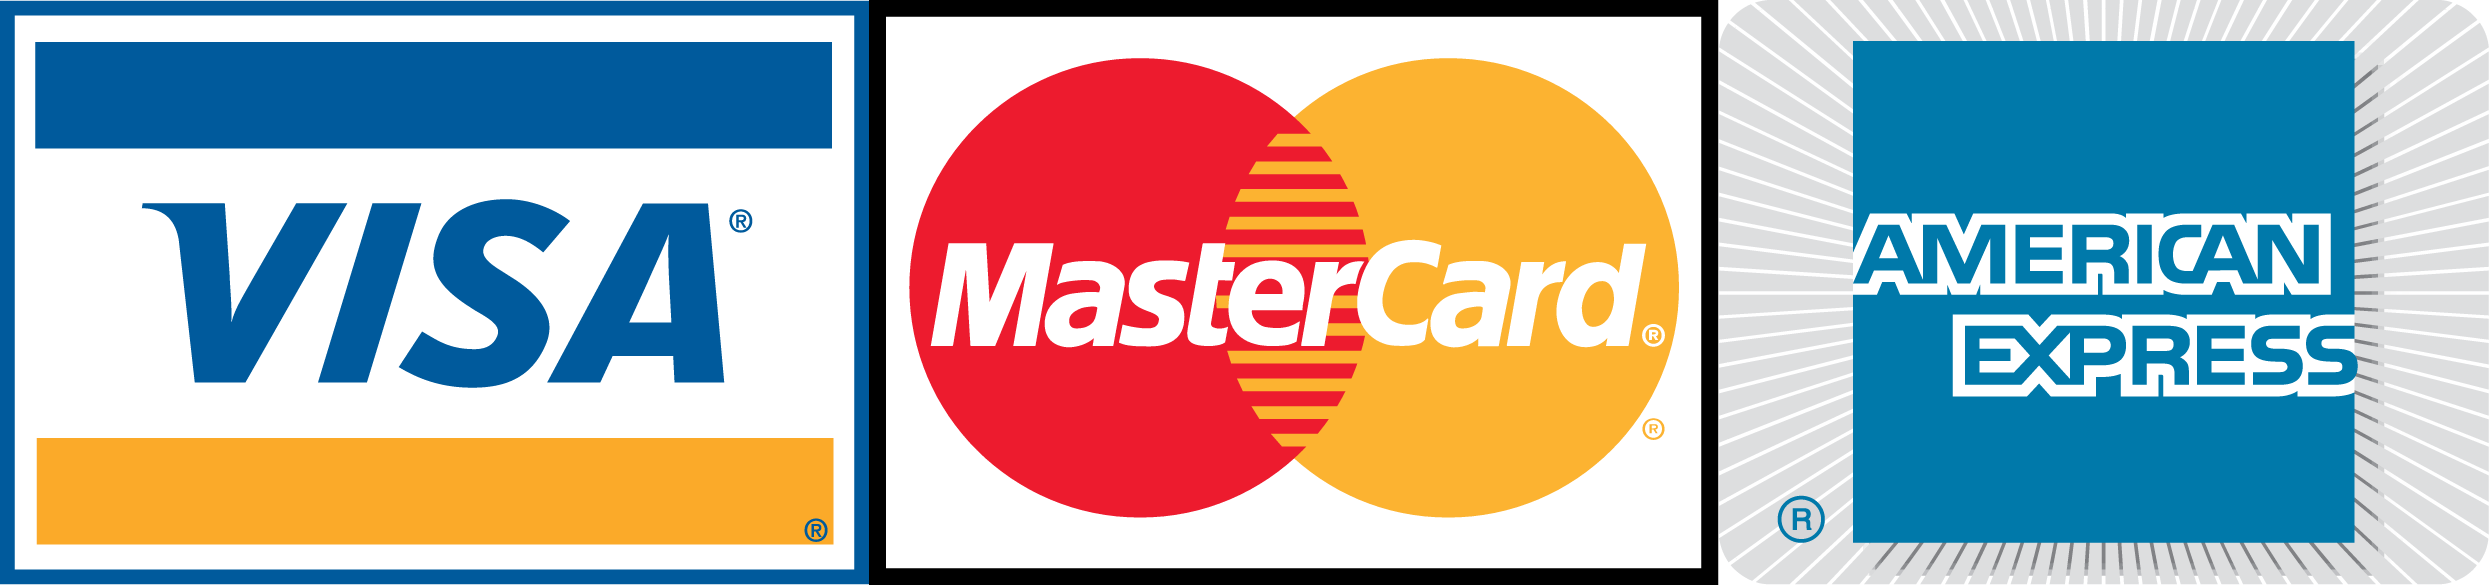 American Express Visa MasterCard Logo - Mastercard HD PNG Transparent Mastercard HD.PNG Images. | PlusPNG